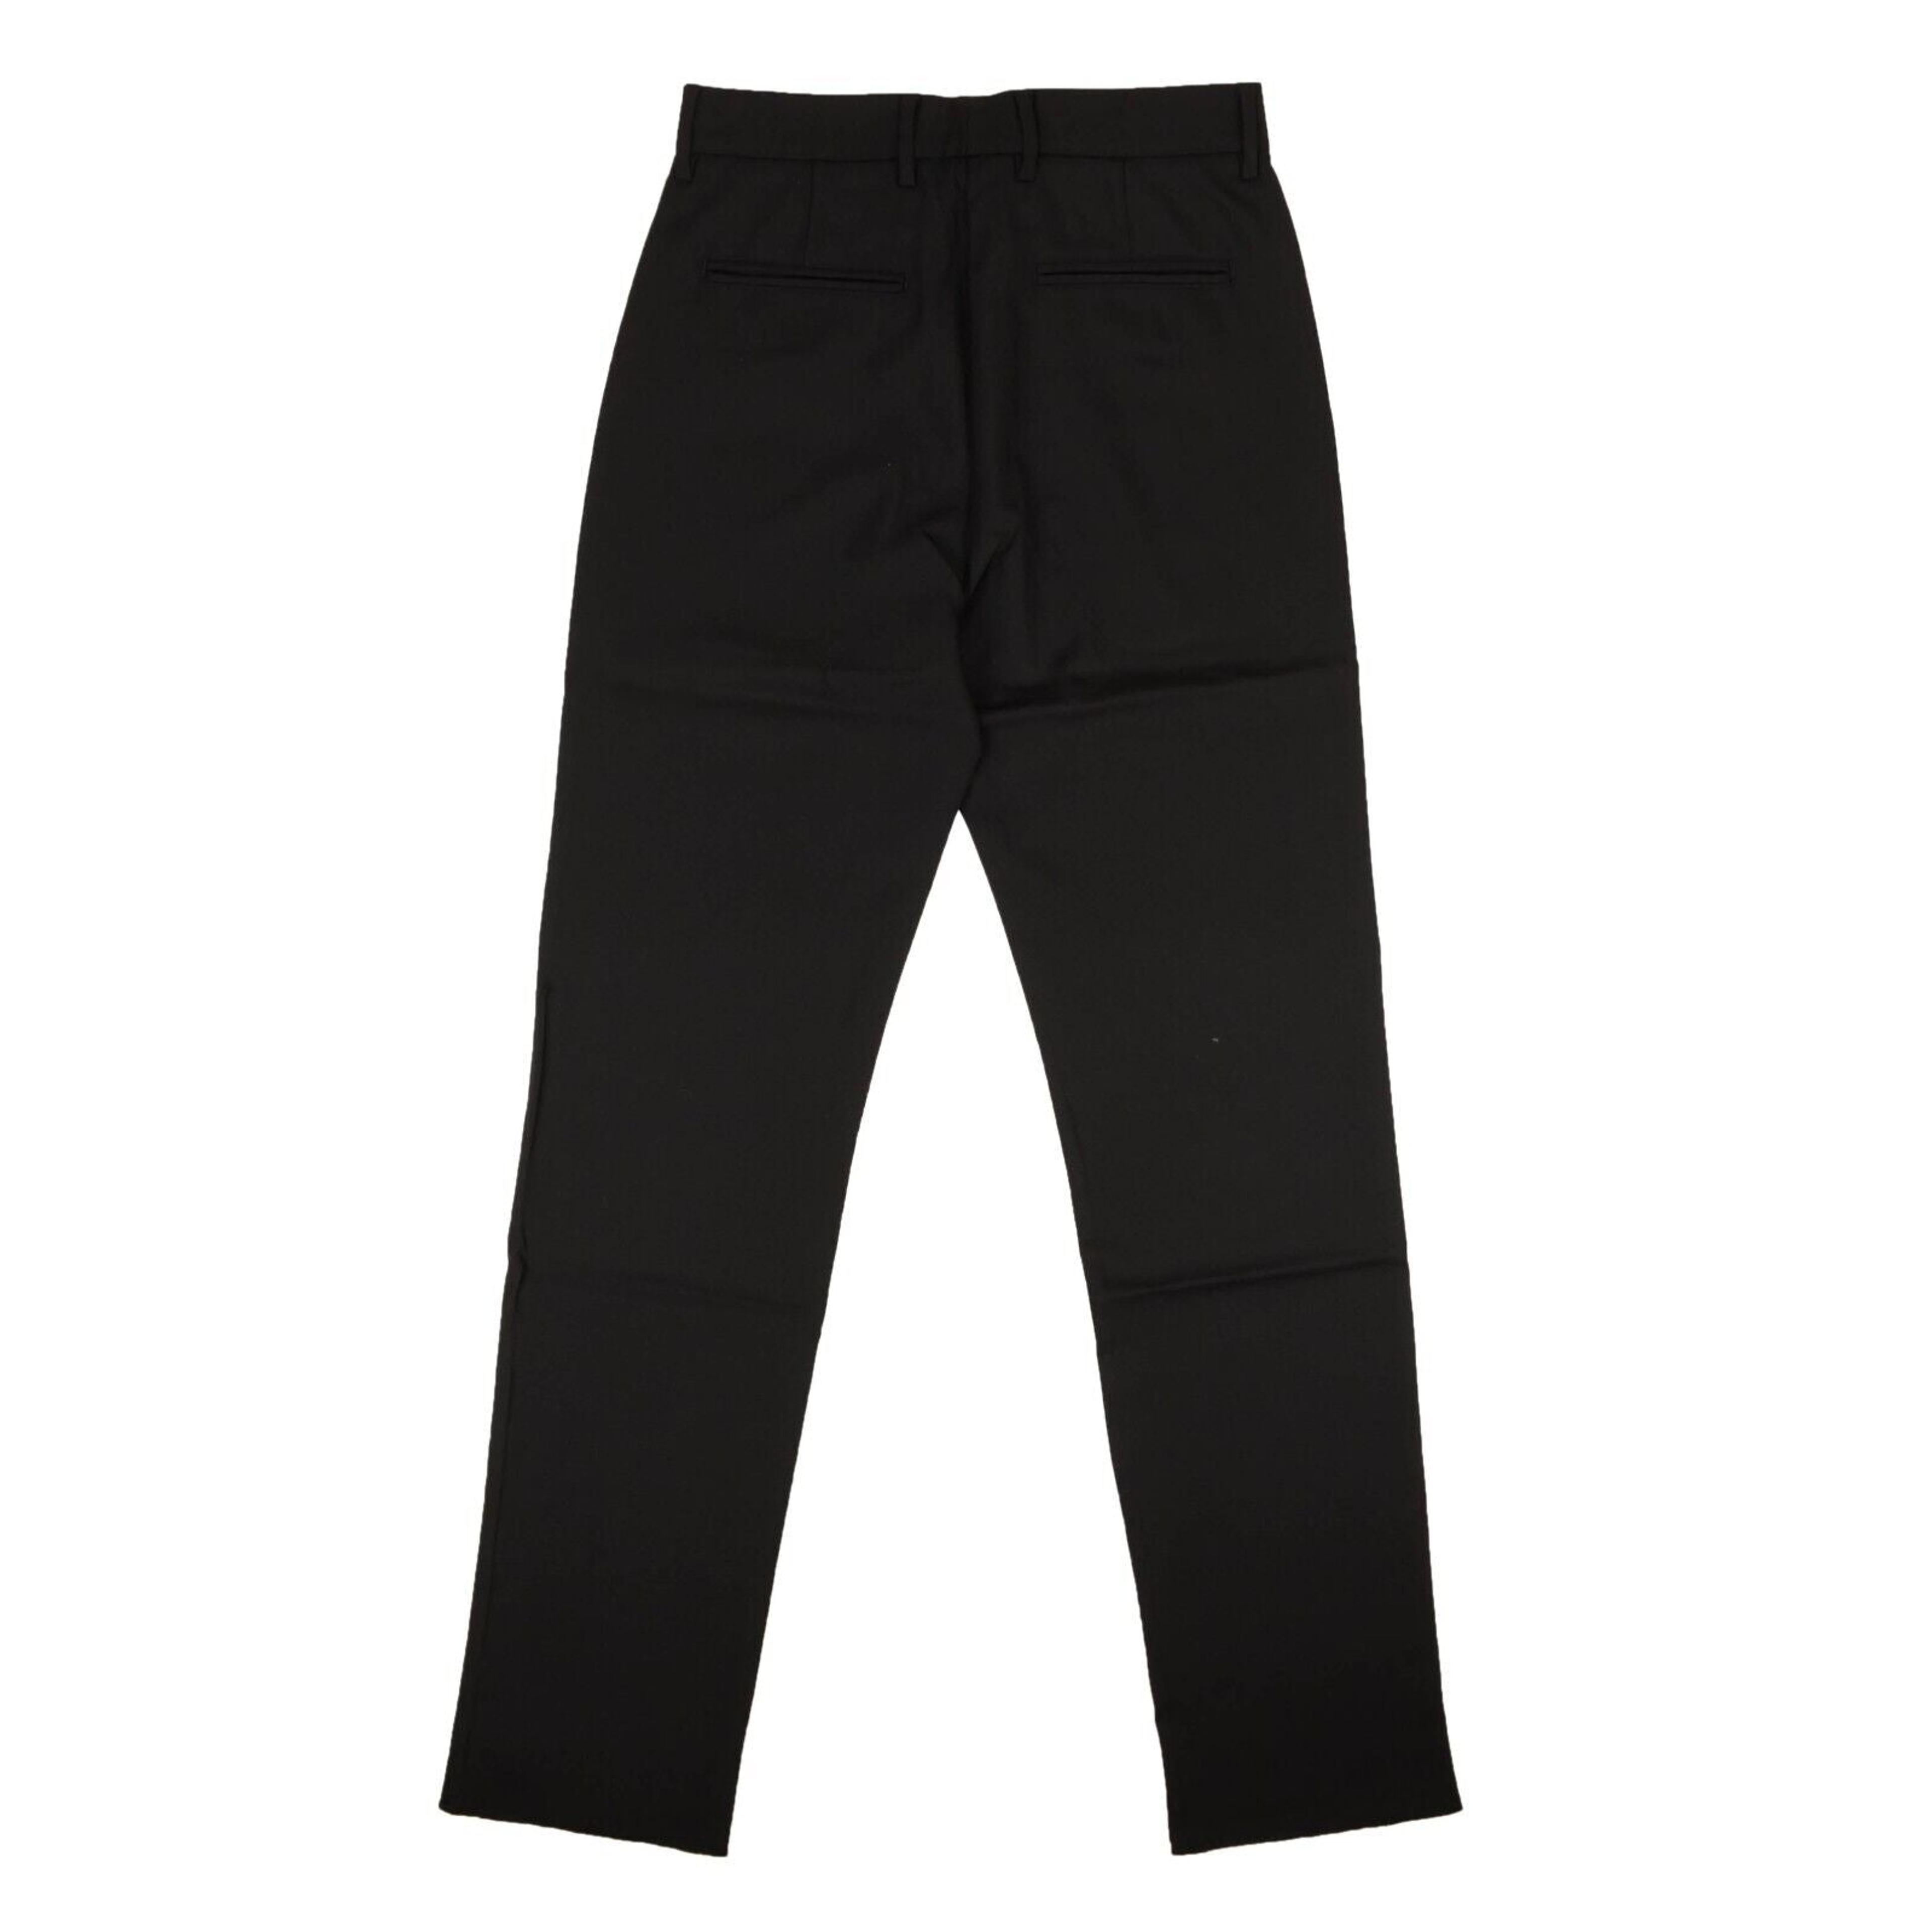 Alternate View 1 of 424 On Fairfax Wool Dress Pants - Black